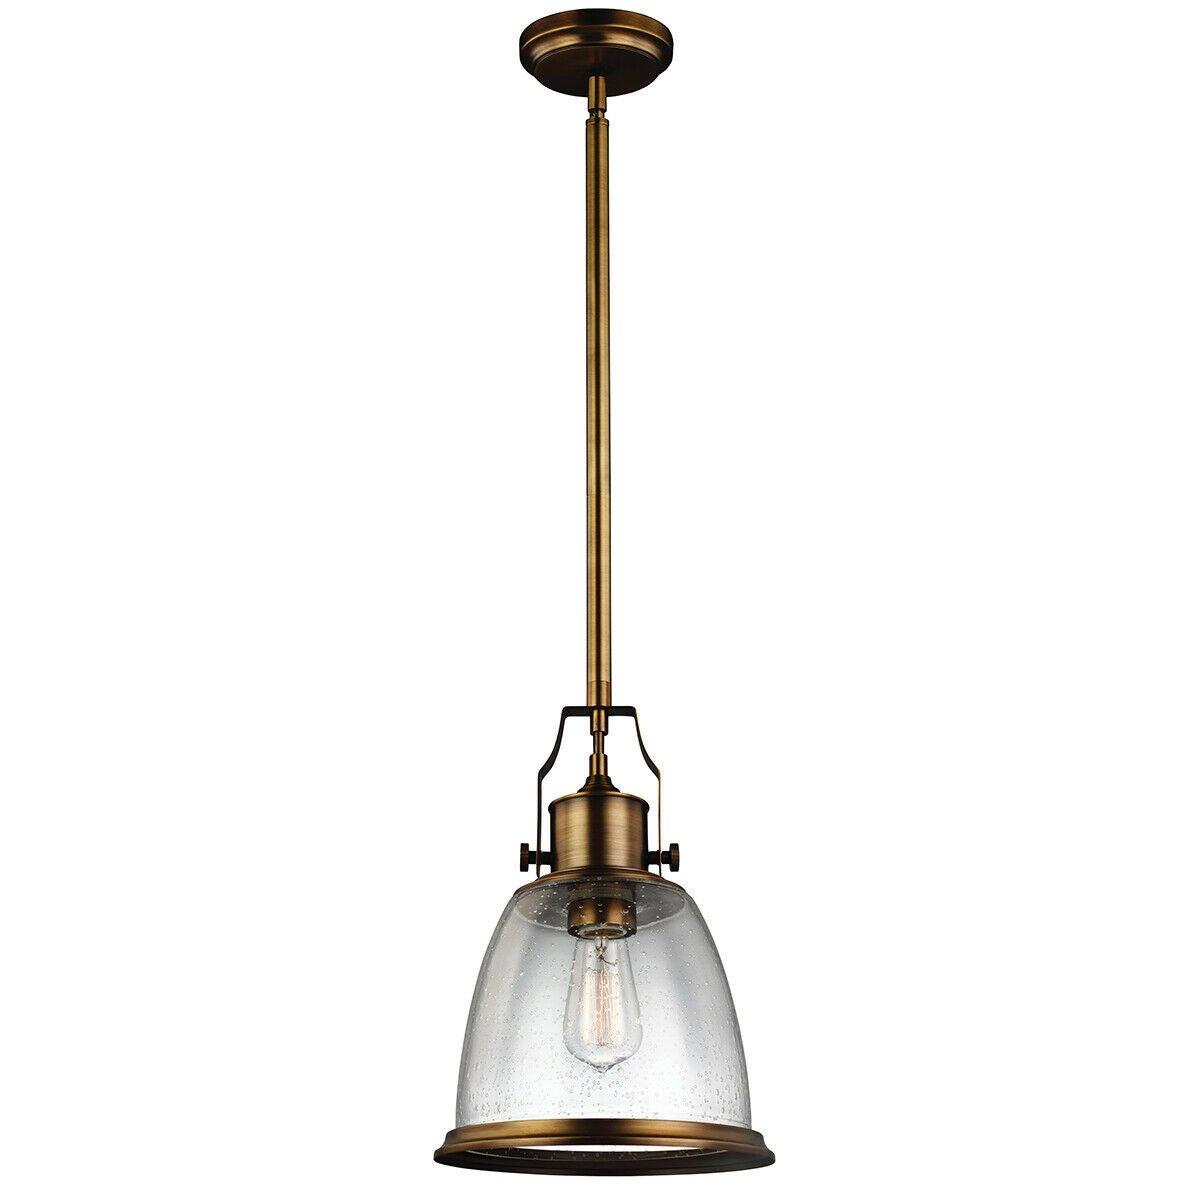 1 Bulb Ceiling Pendant Light Fitting Aged Brass Finish LED E27 75W Bulb